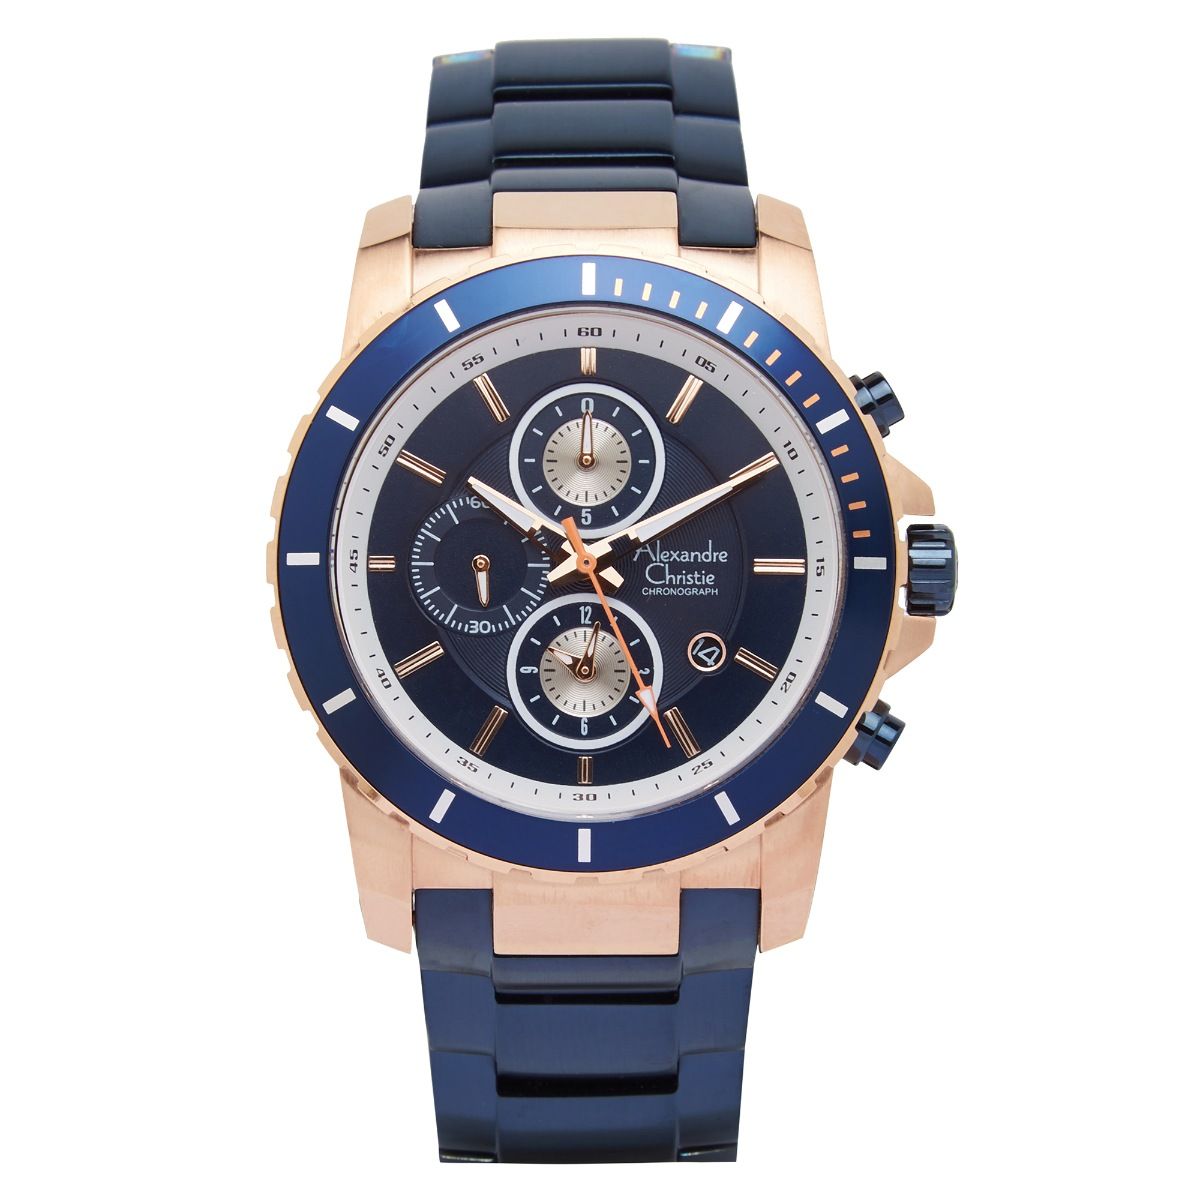 Buy Alexandre Christie Ac 6141 Mcb Chronograph Watch for Men - Cosmic Blue  Online